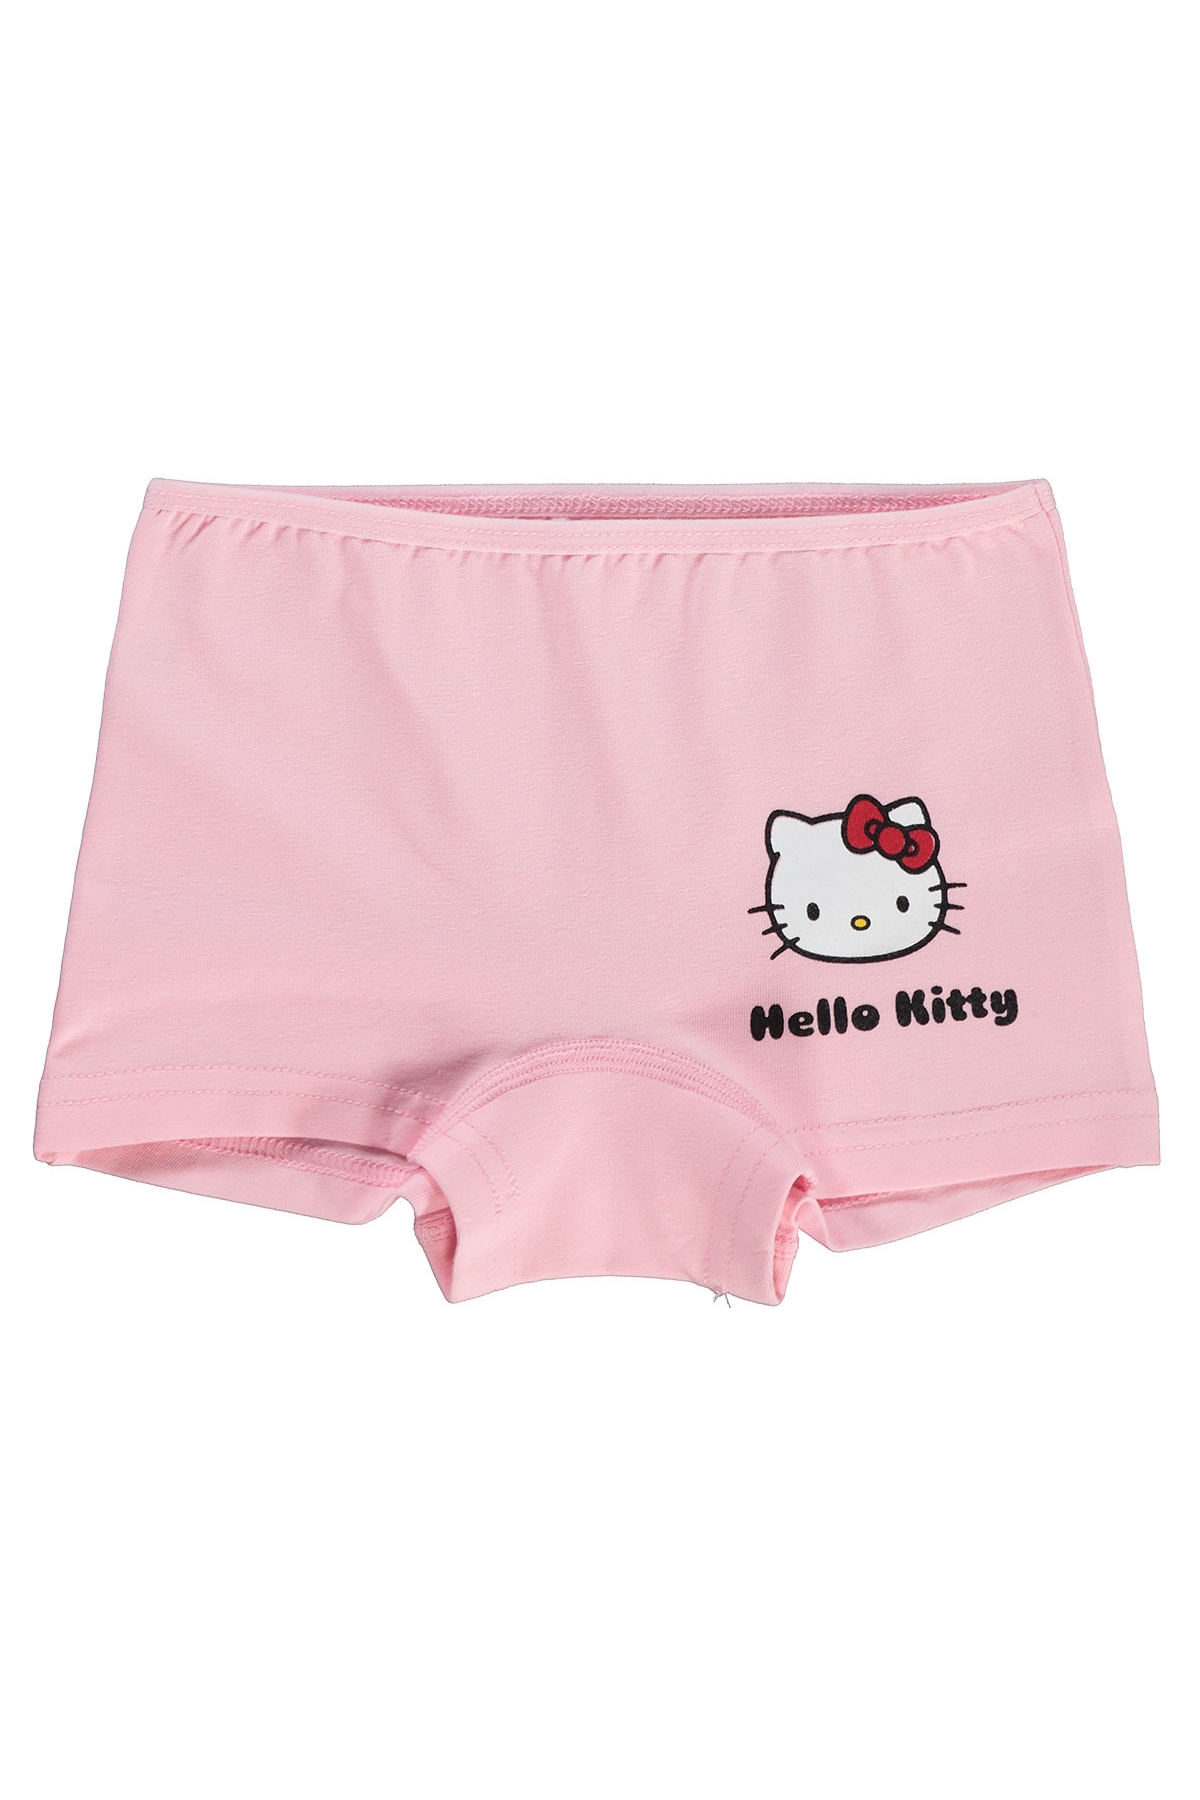  Hello Kitty Iç Çamaşırı